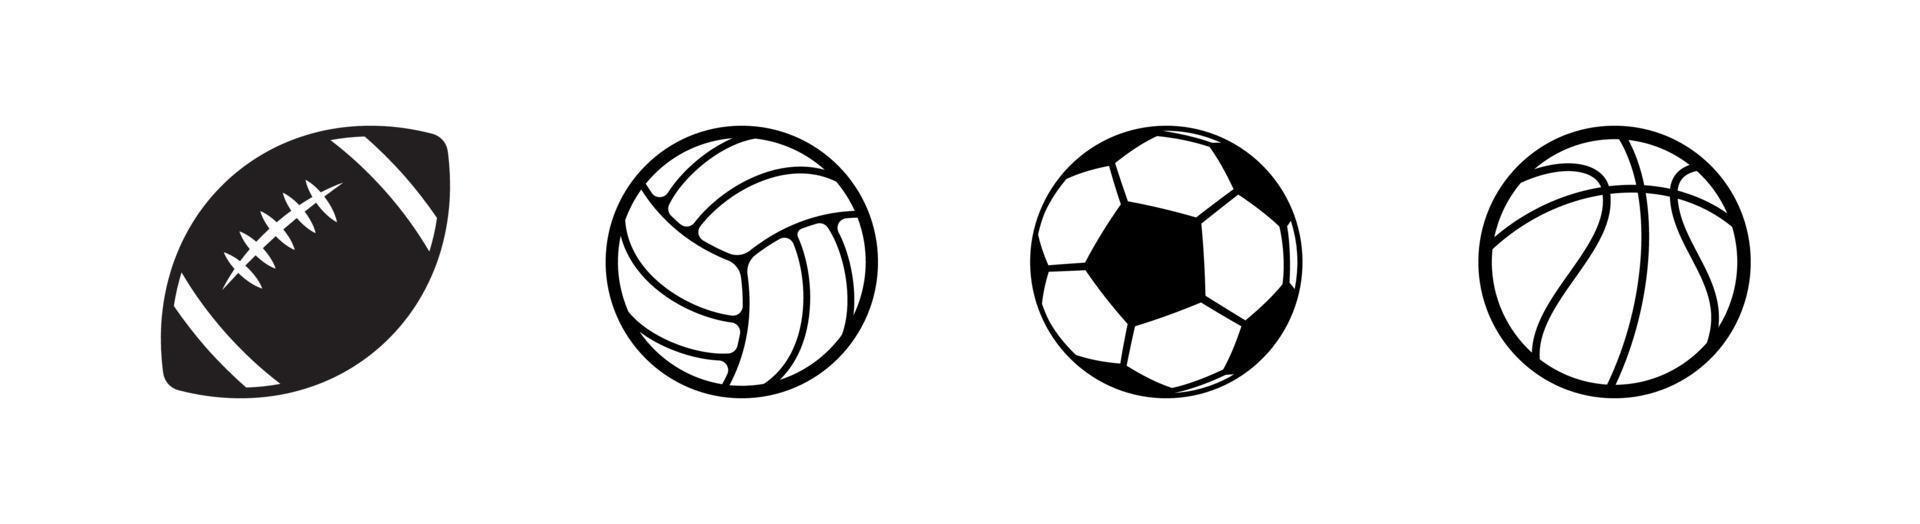 Popular sport game ball icon design element suitable for websites, print design or app vector